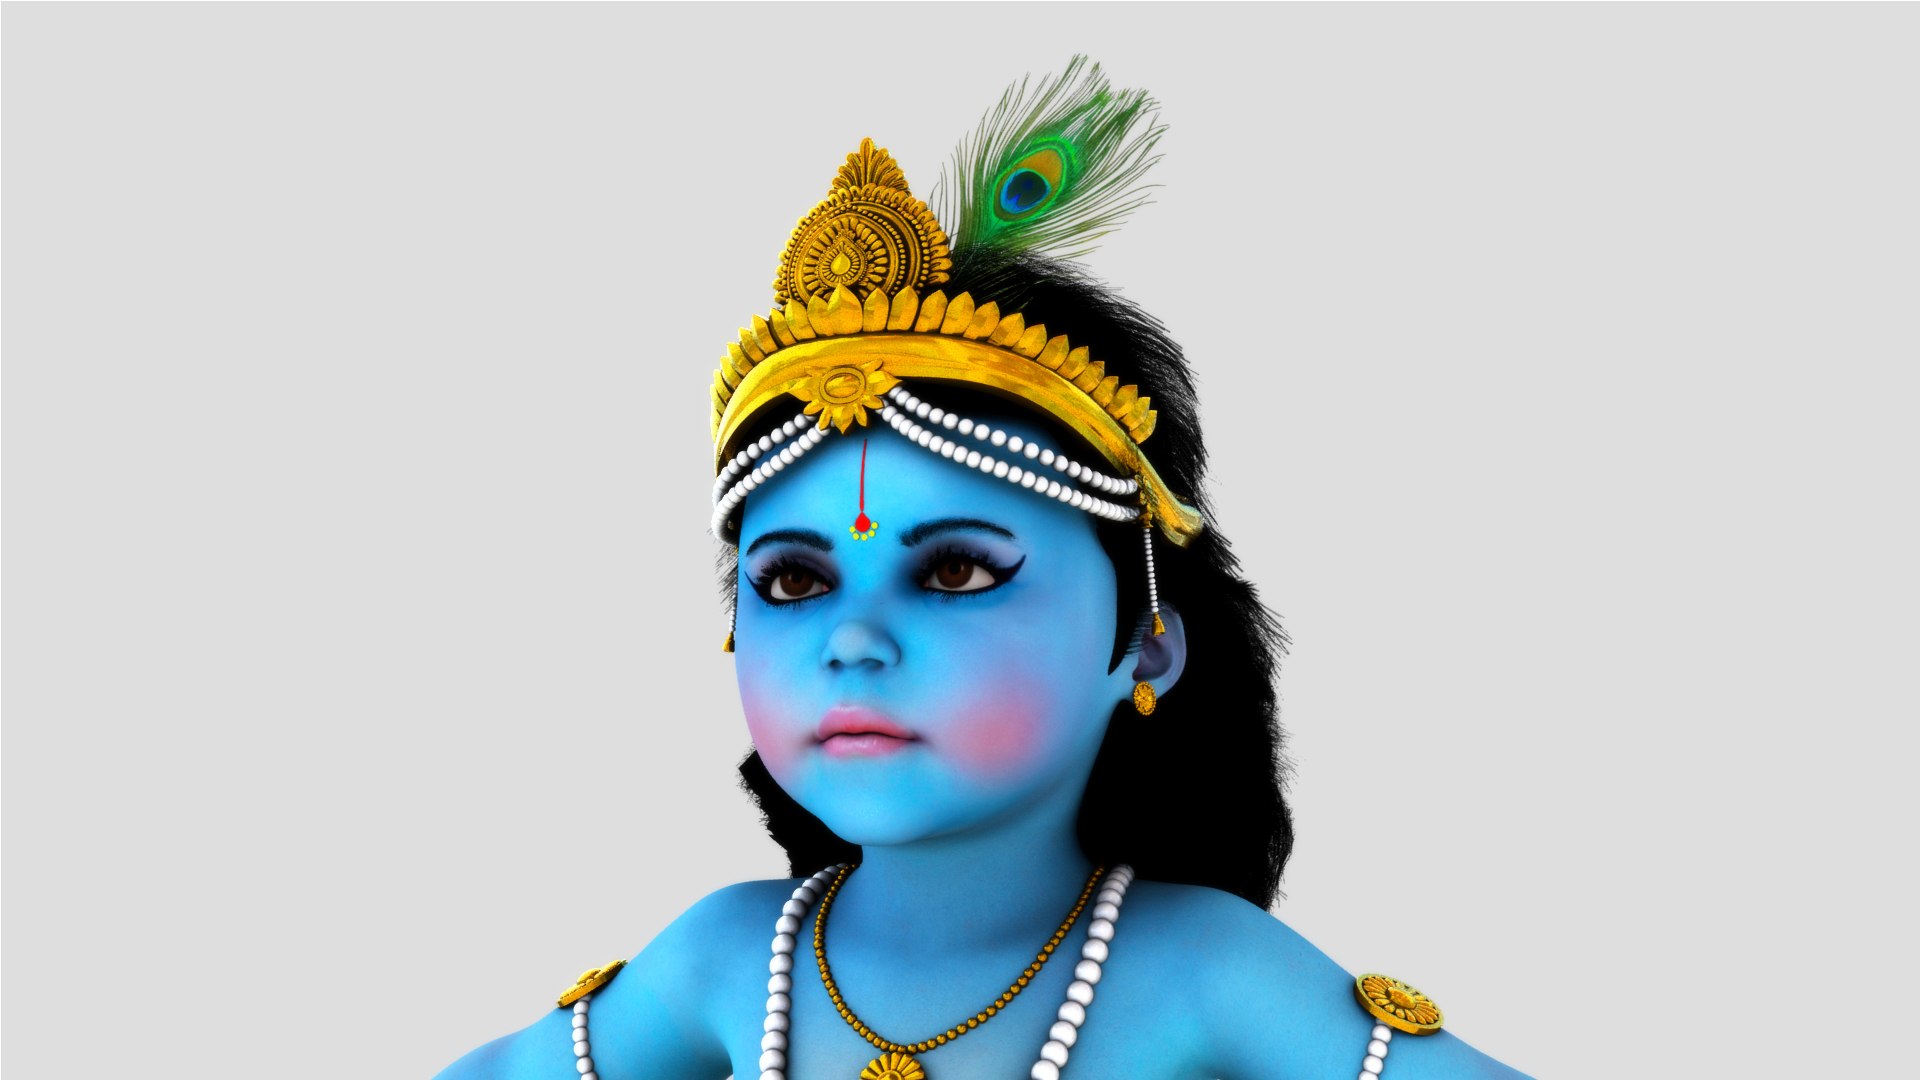 PHOTOS| Janmashtami 2020: Children dress up as Lord Krishna to celebrate  his birth | Hindustan Times